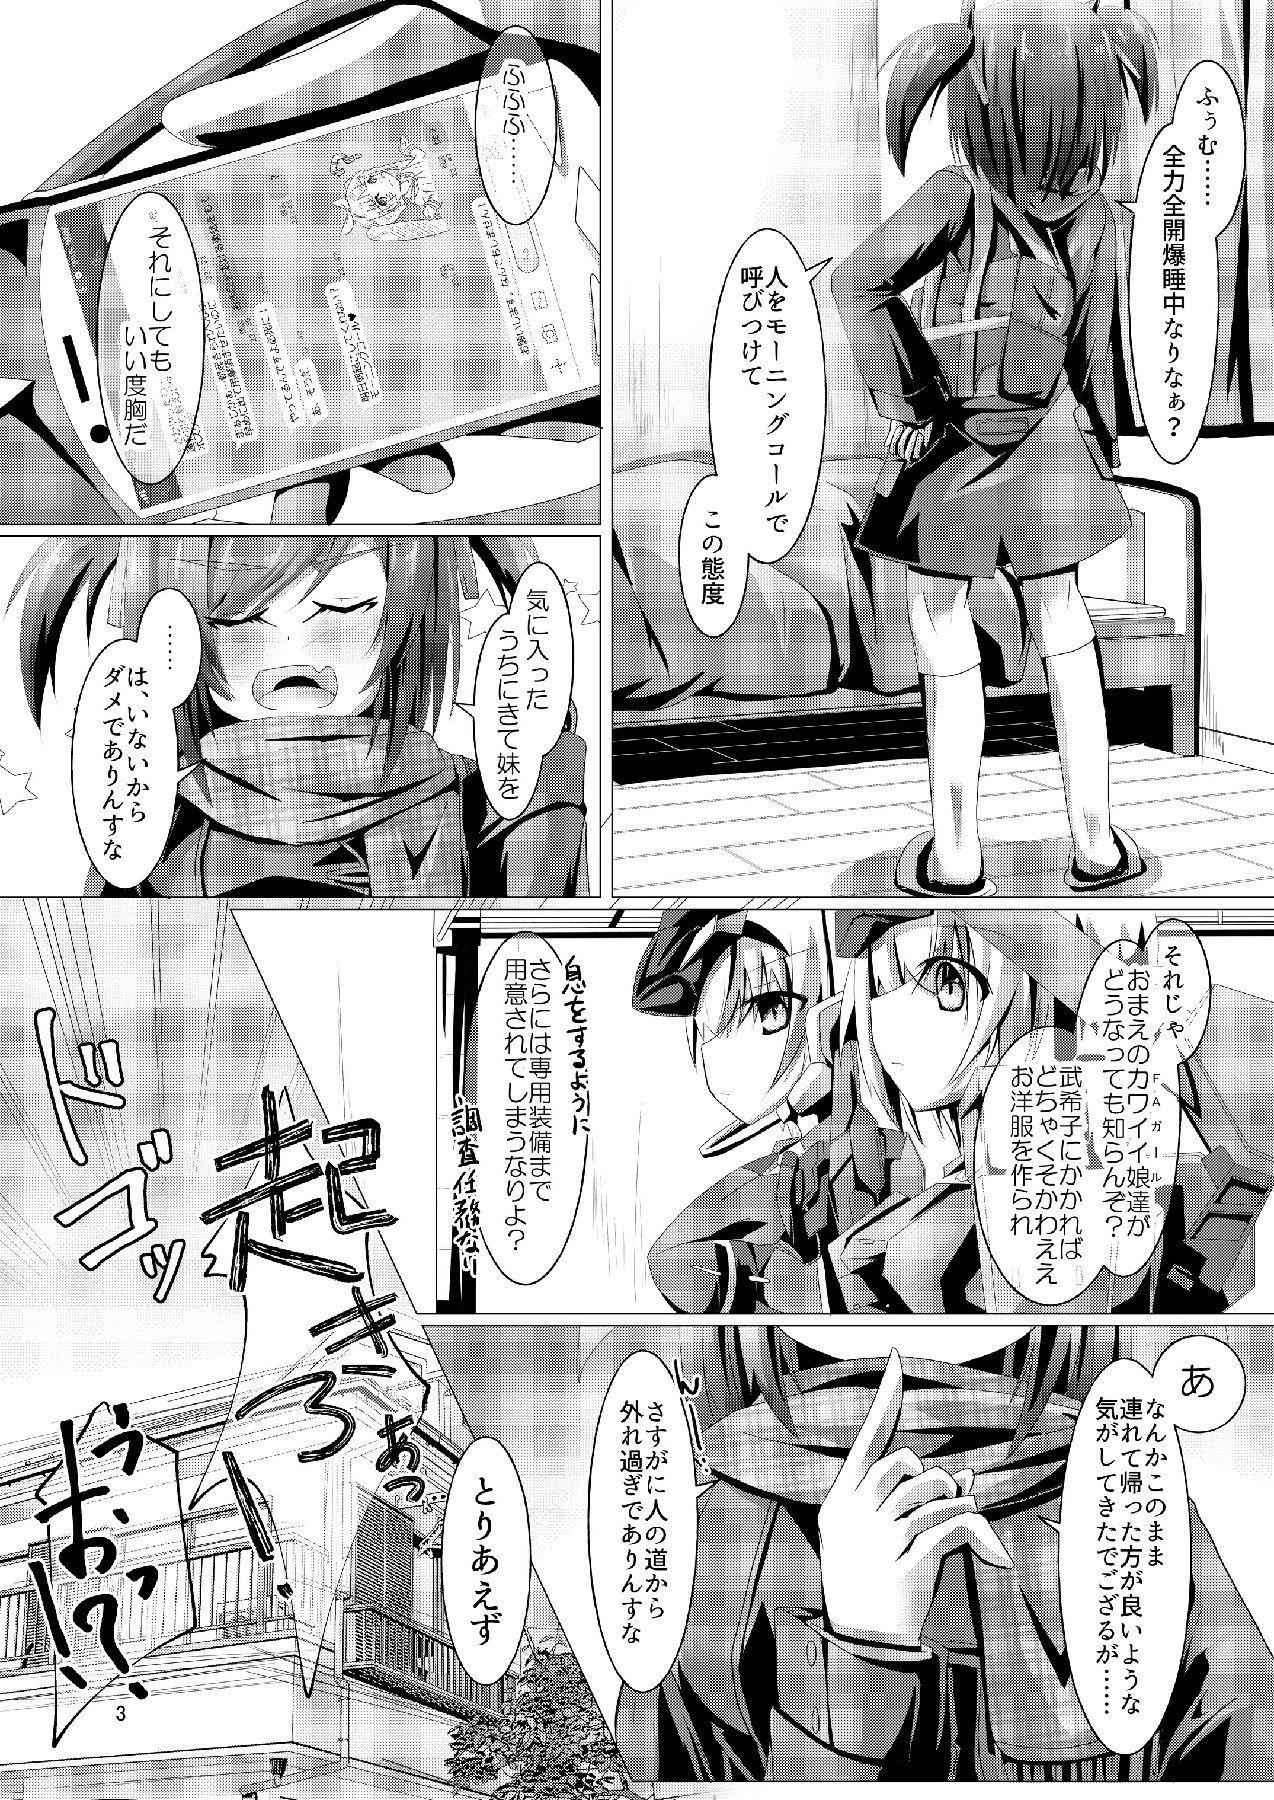 Screaming Bukiko ga Kokuhaku Sareta Ken 3 - Frame arms girl Kiss - Page 3